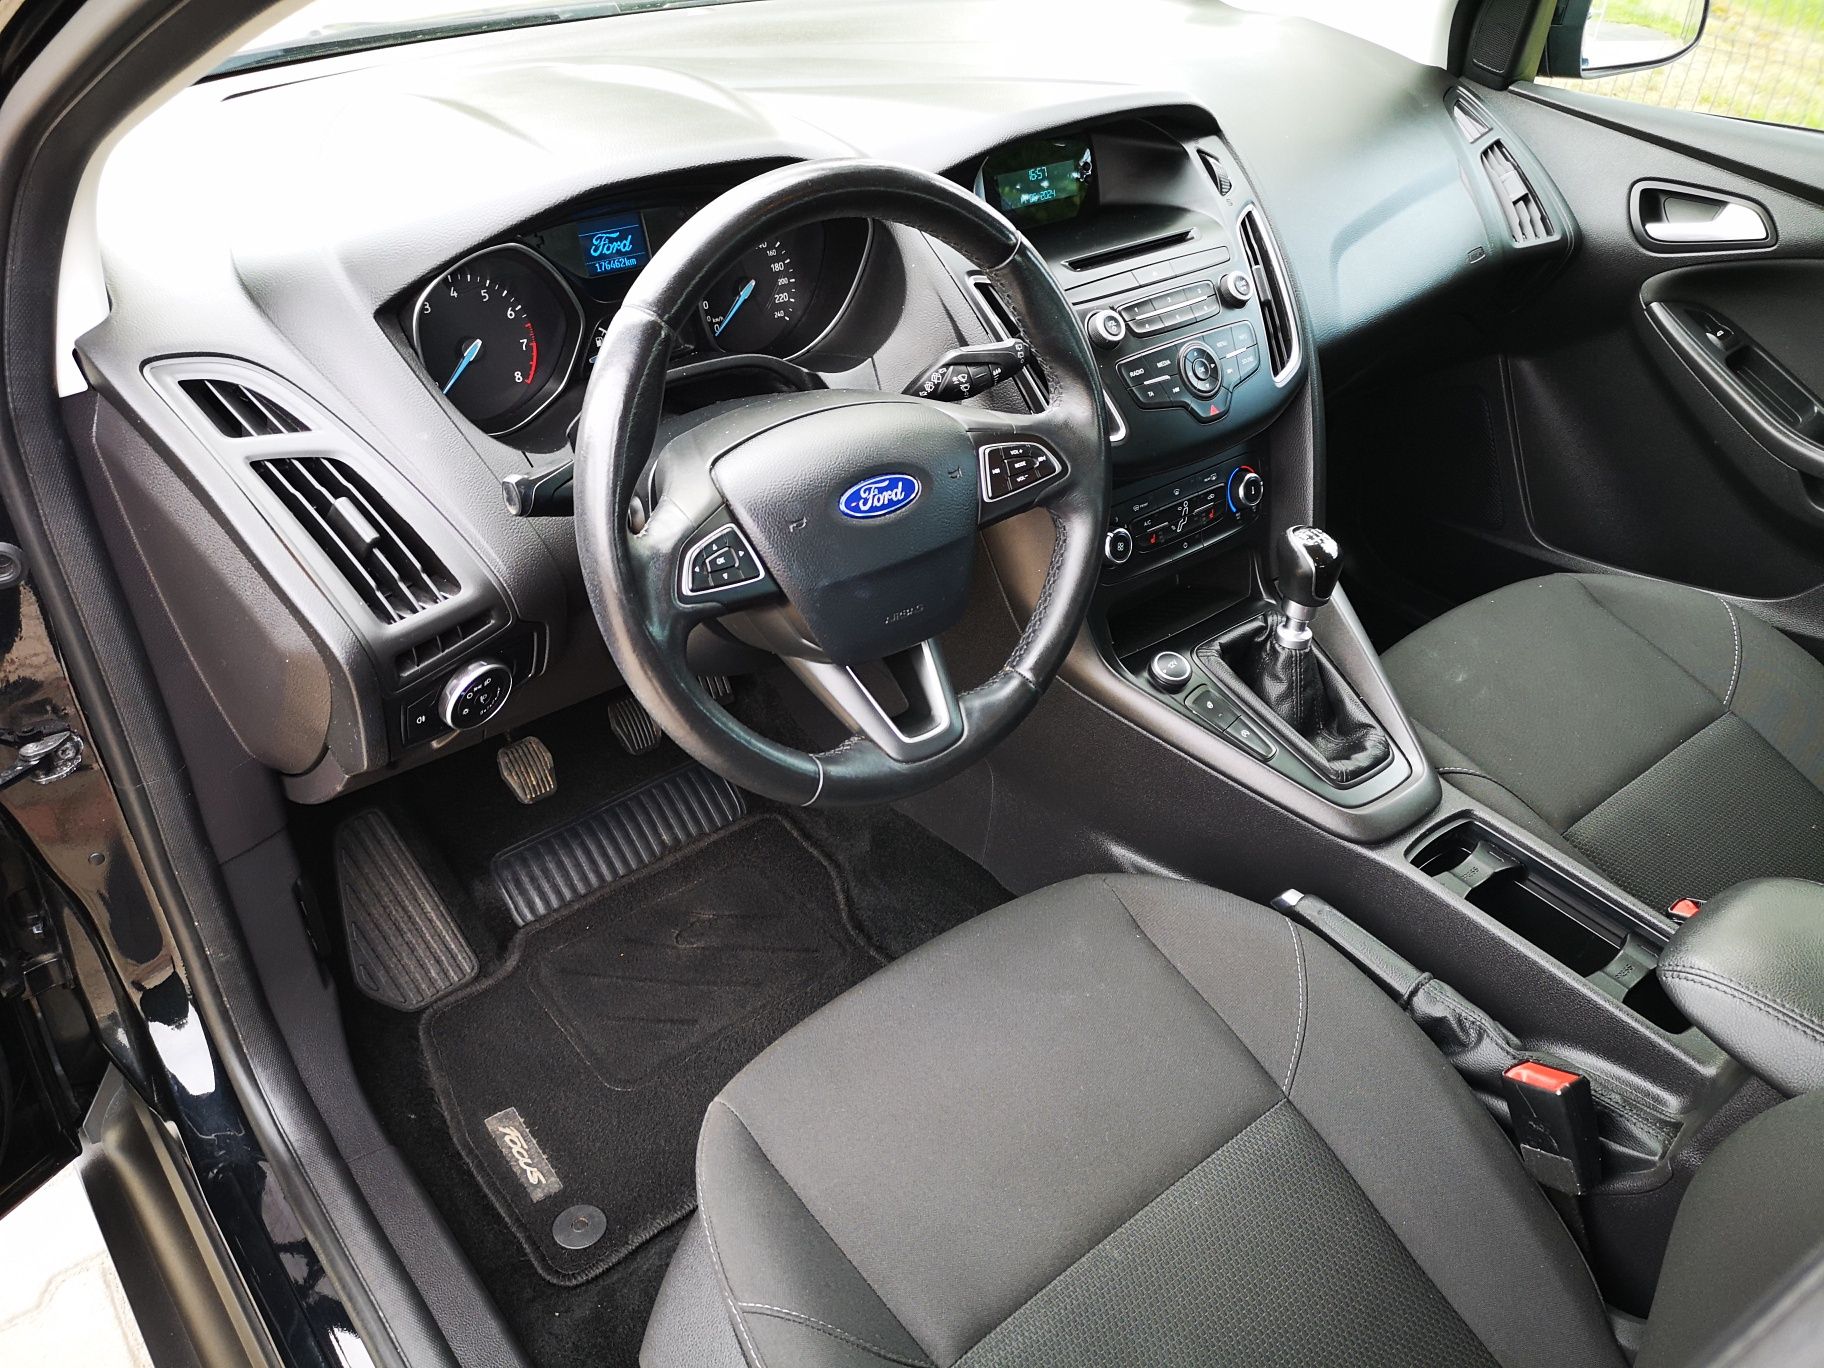 Ford Focus Mk3 Lift Benzynka* Klima* 2 Kpl. Kół* Okazja*